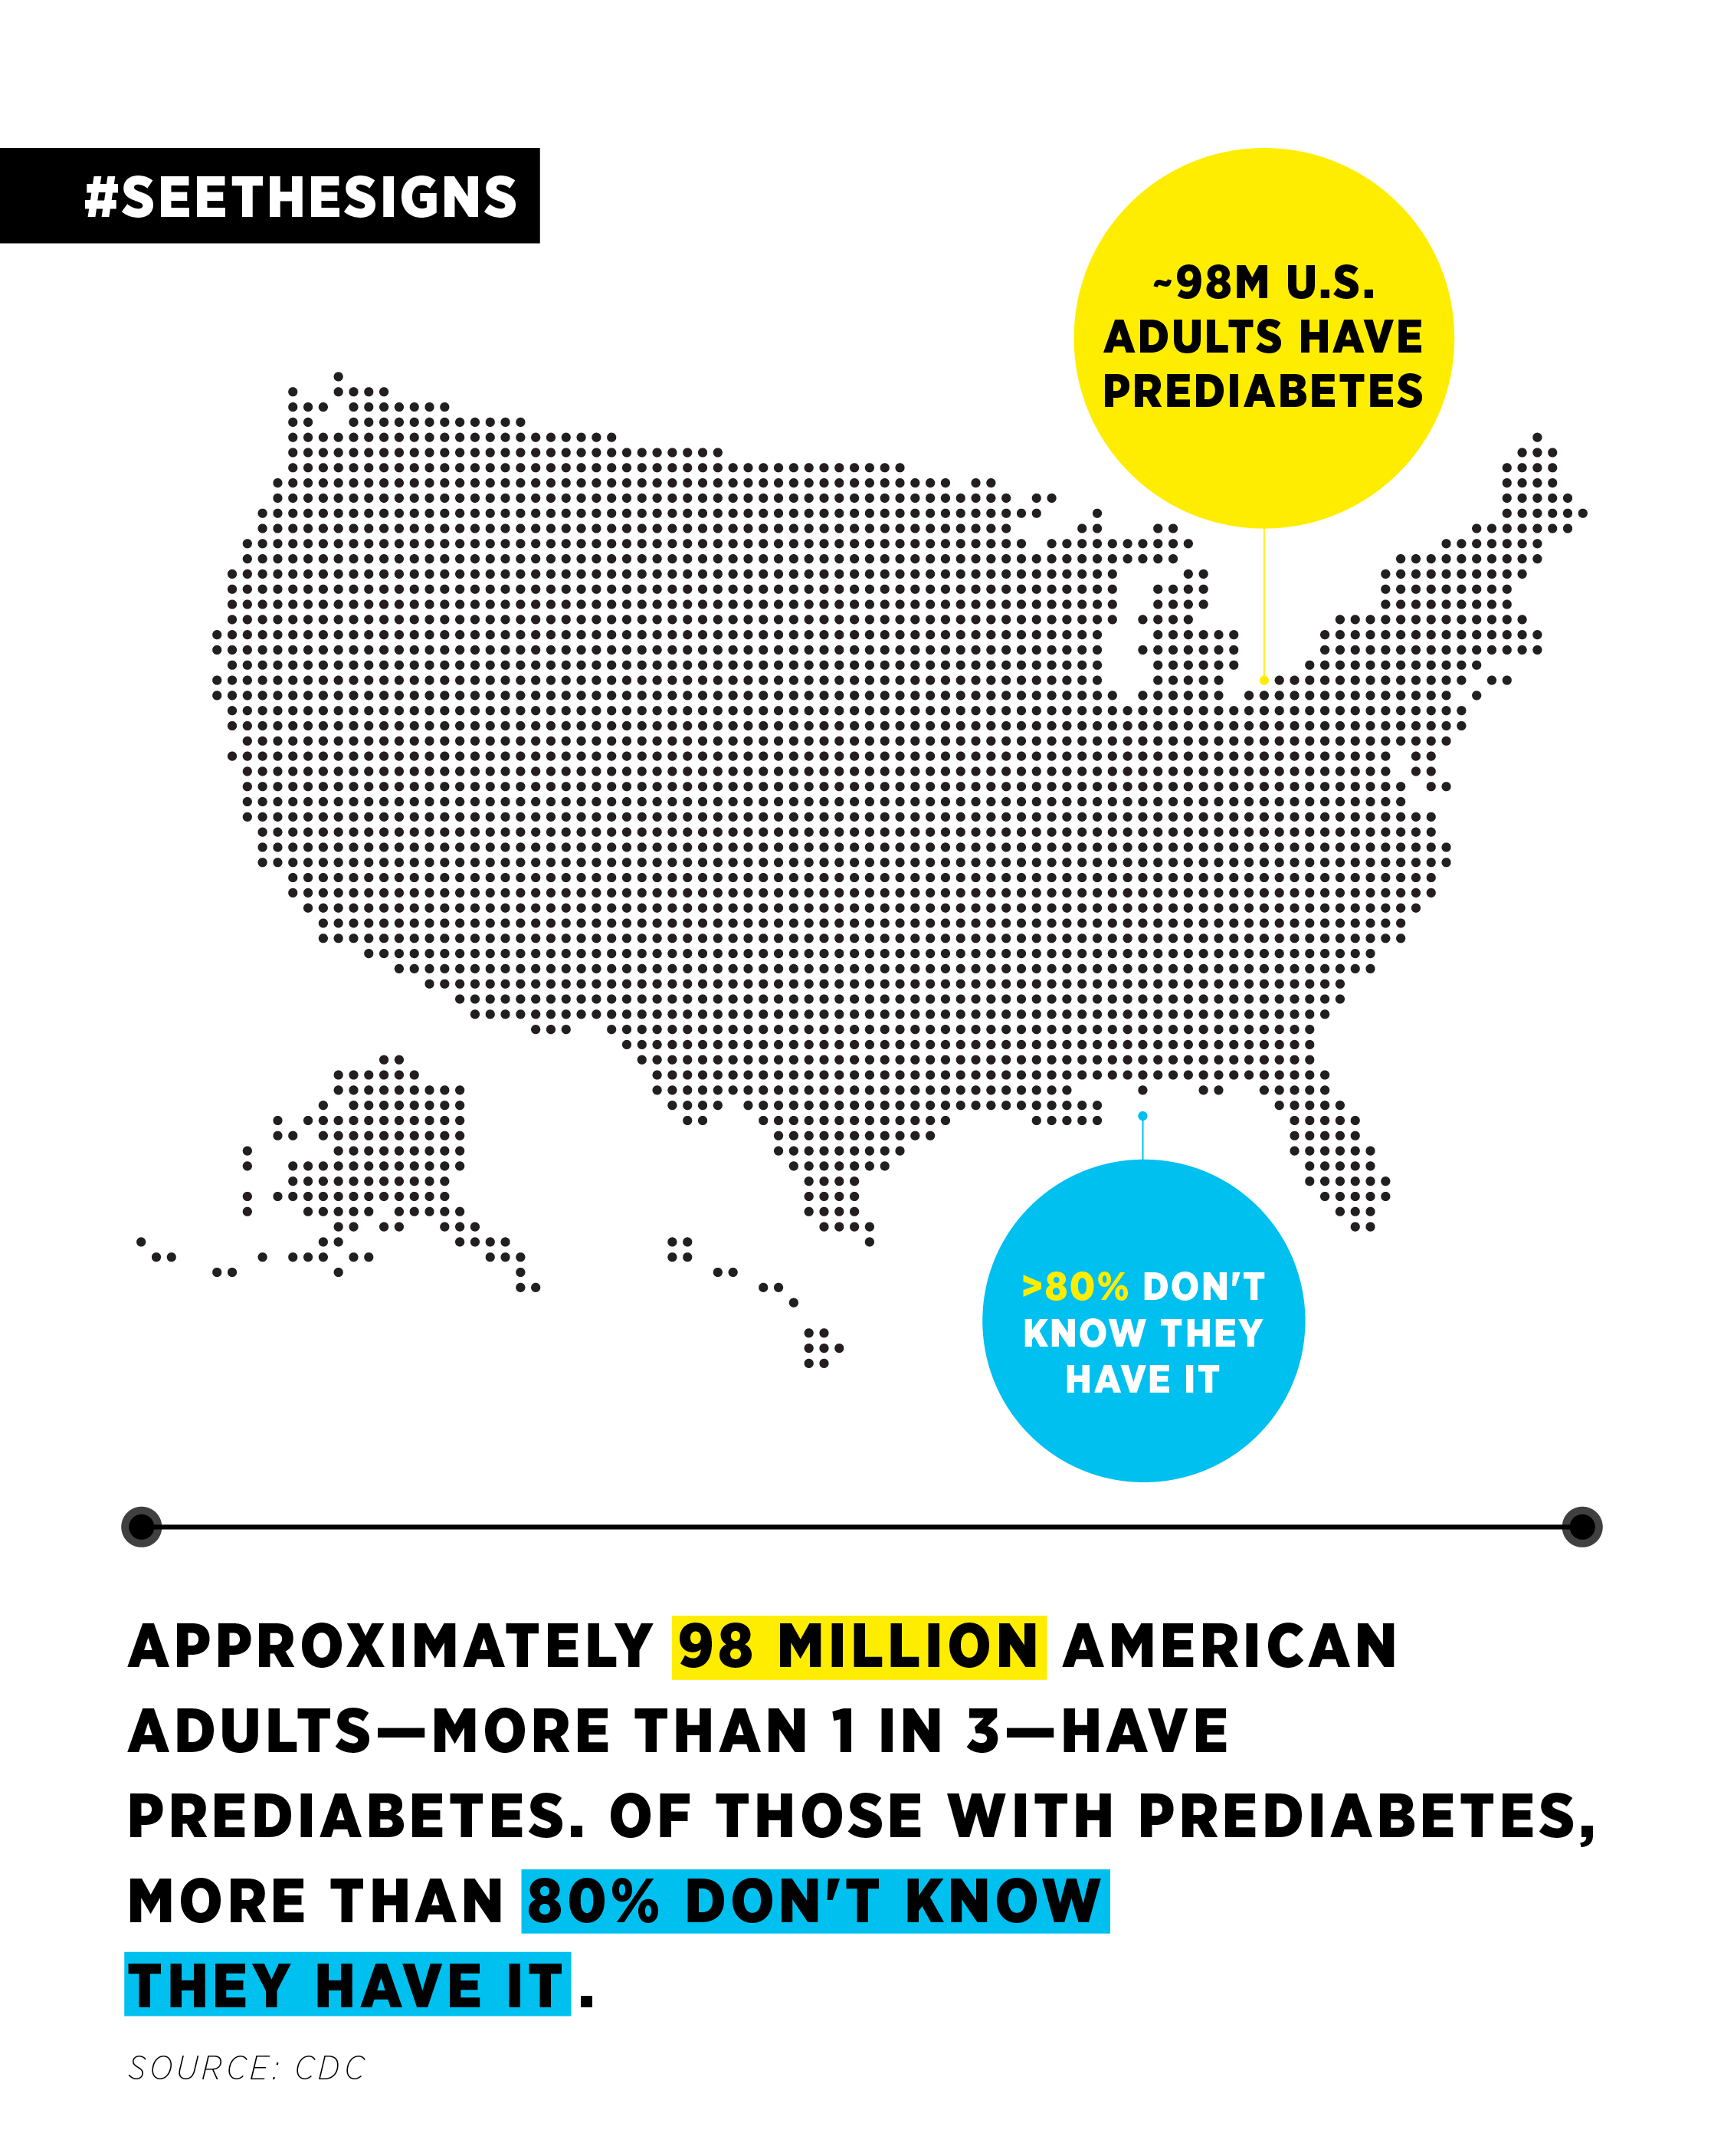 98 million U.S. adults have prediabetes